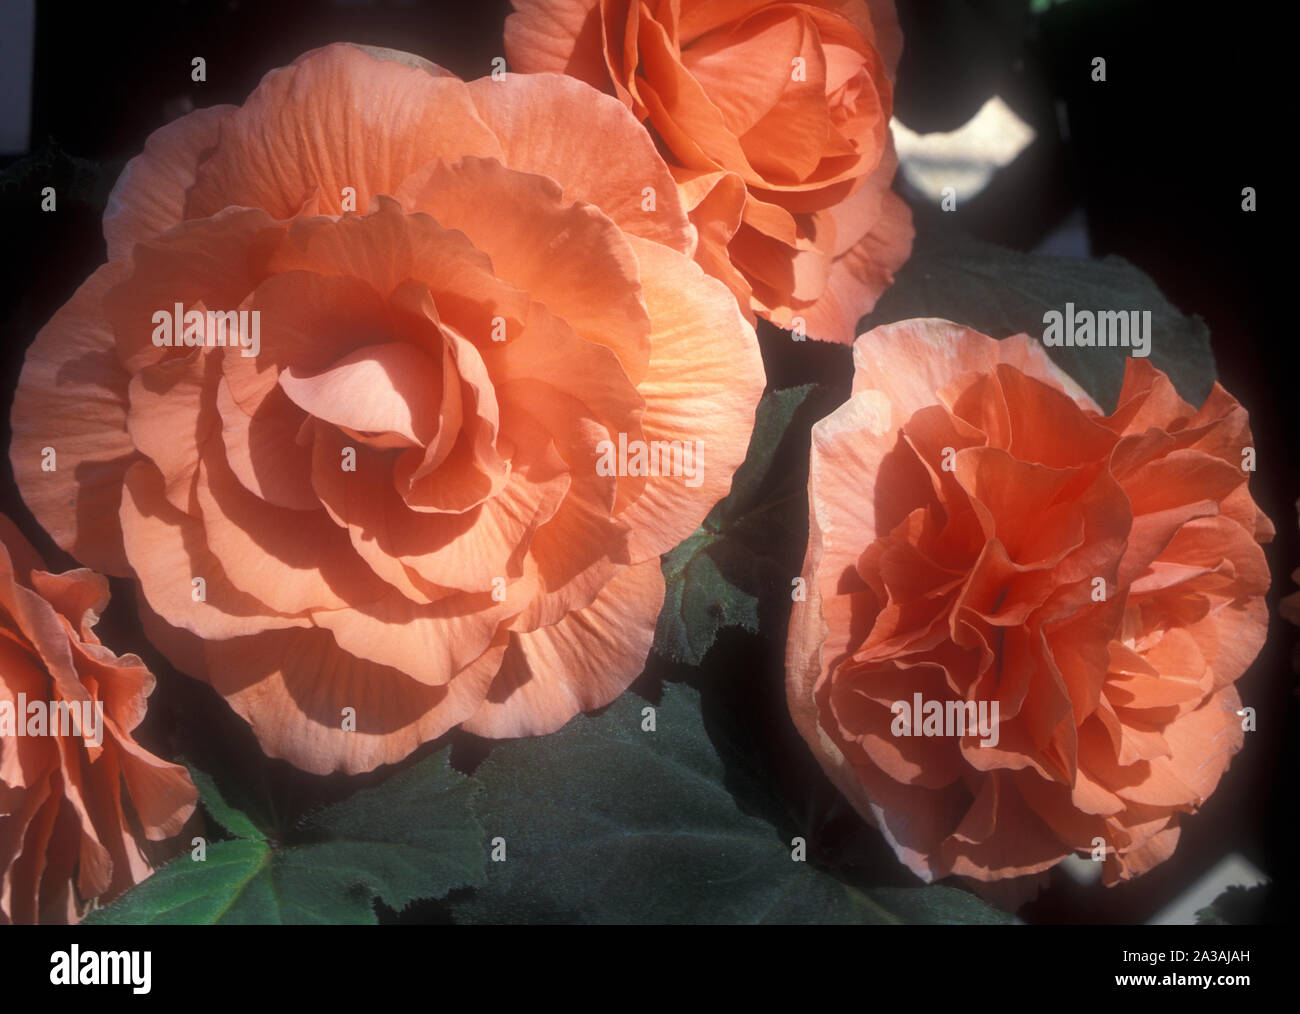 ORANGE BEGONIA FLOWERS 'BEULAH POWELL' Stock Photo